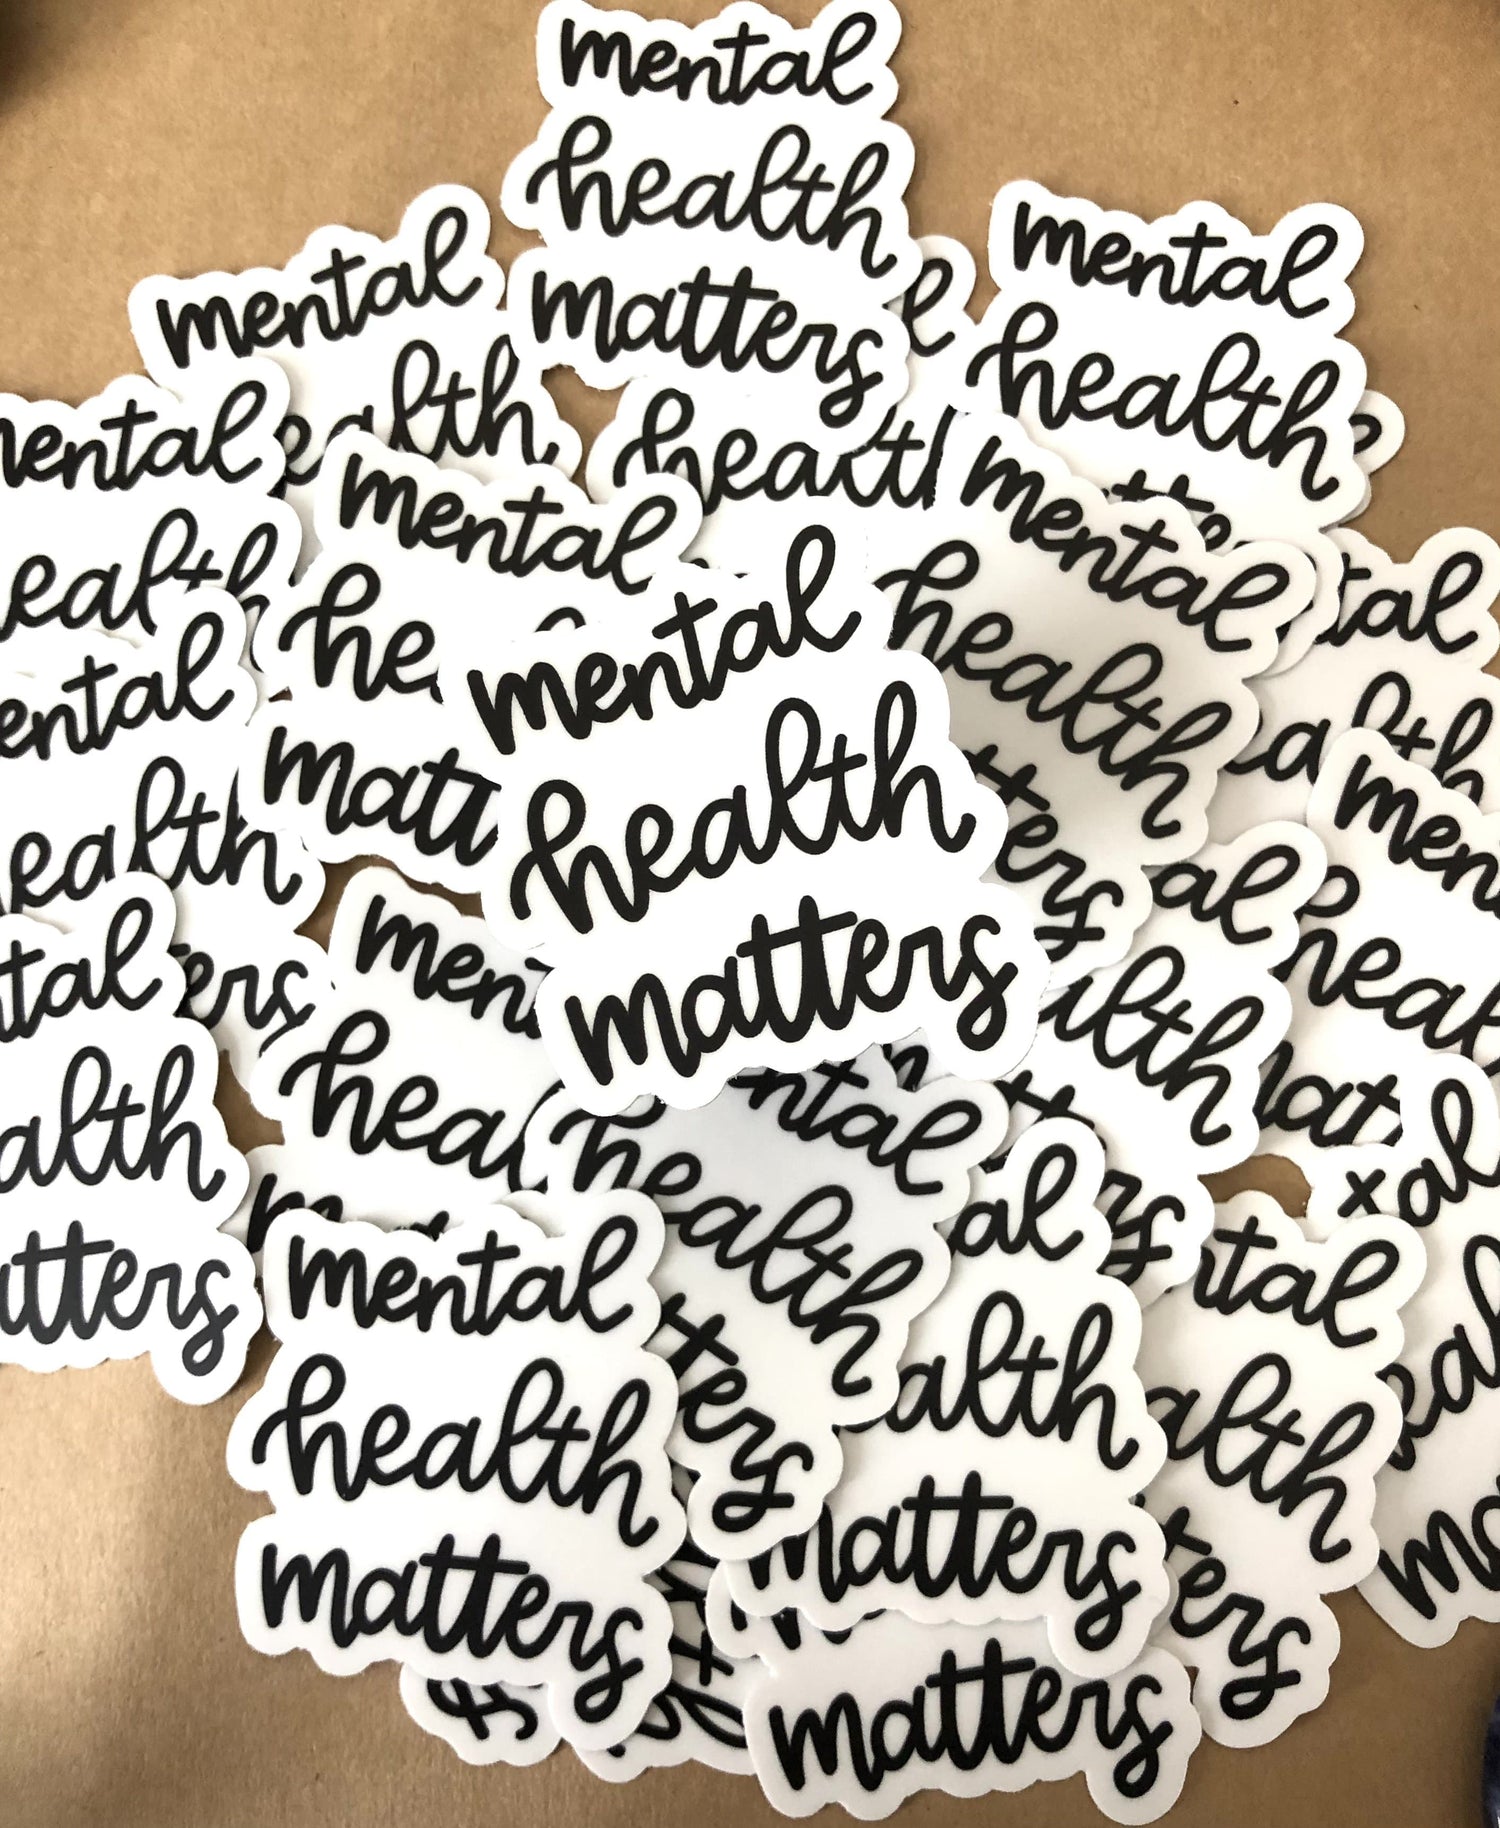 Mental Health Matters Sticker - [Good Apparel]